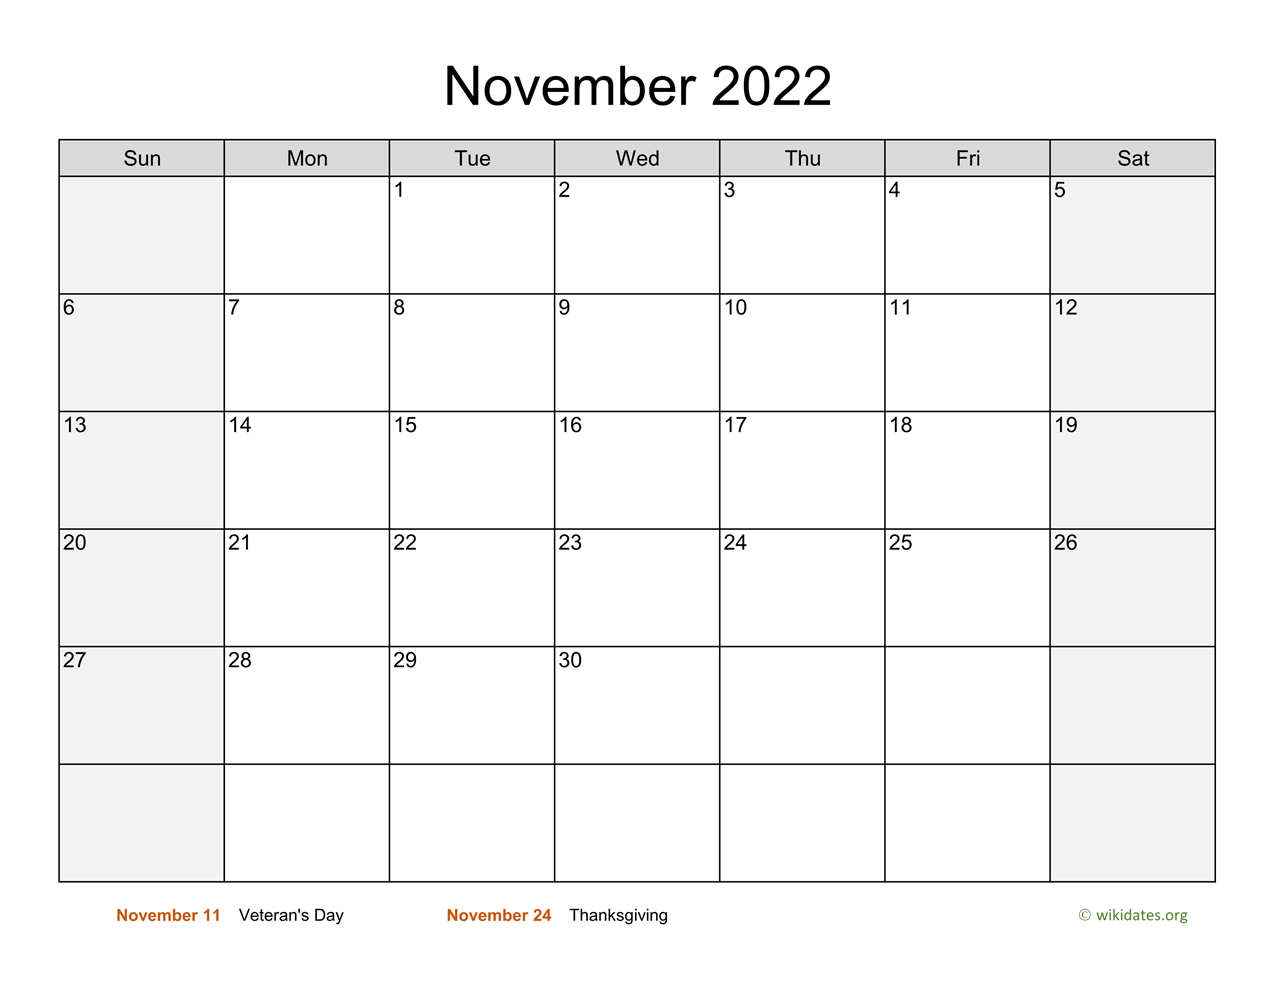 Thanksgiving Calendar 2022 November 2022 Calendar With Weekend Shaded | Wikidates.org